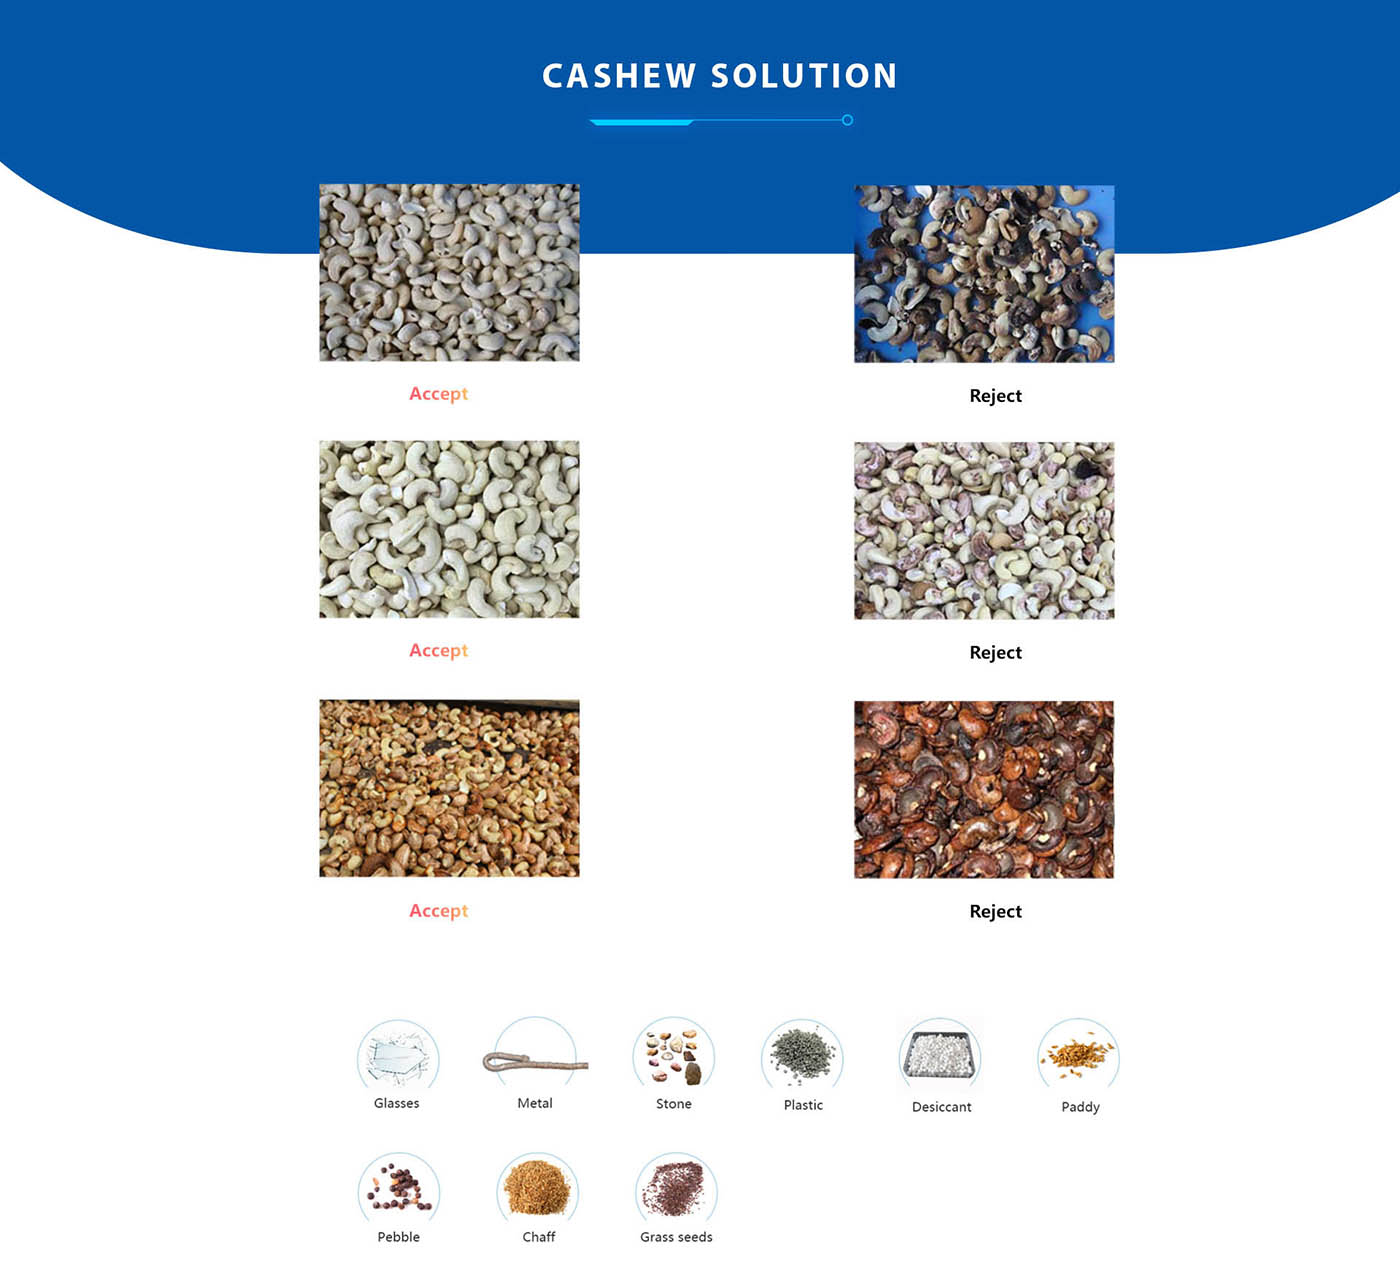 Cashew solution